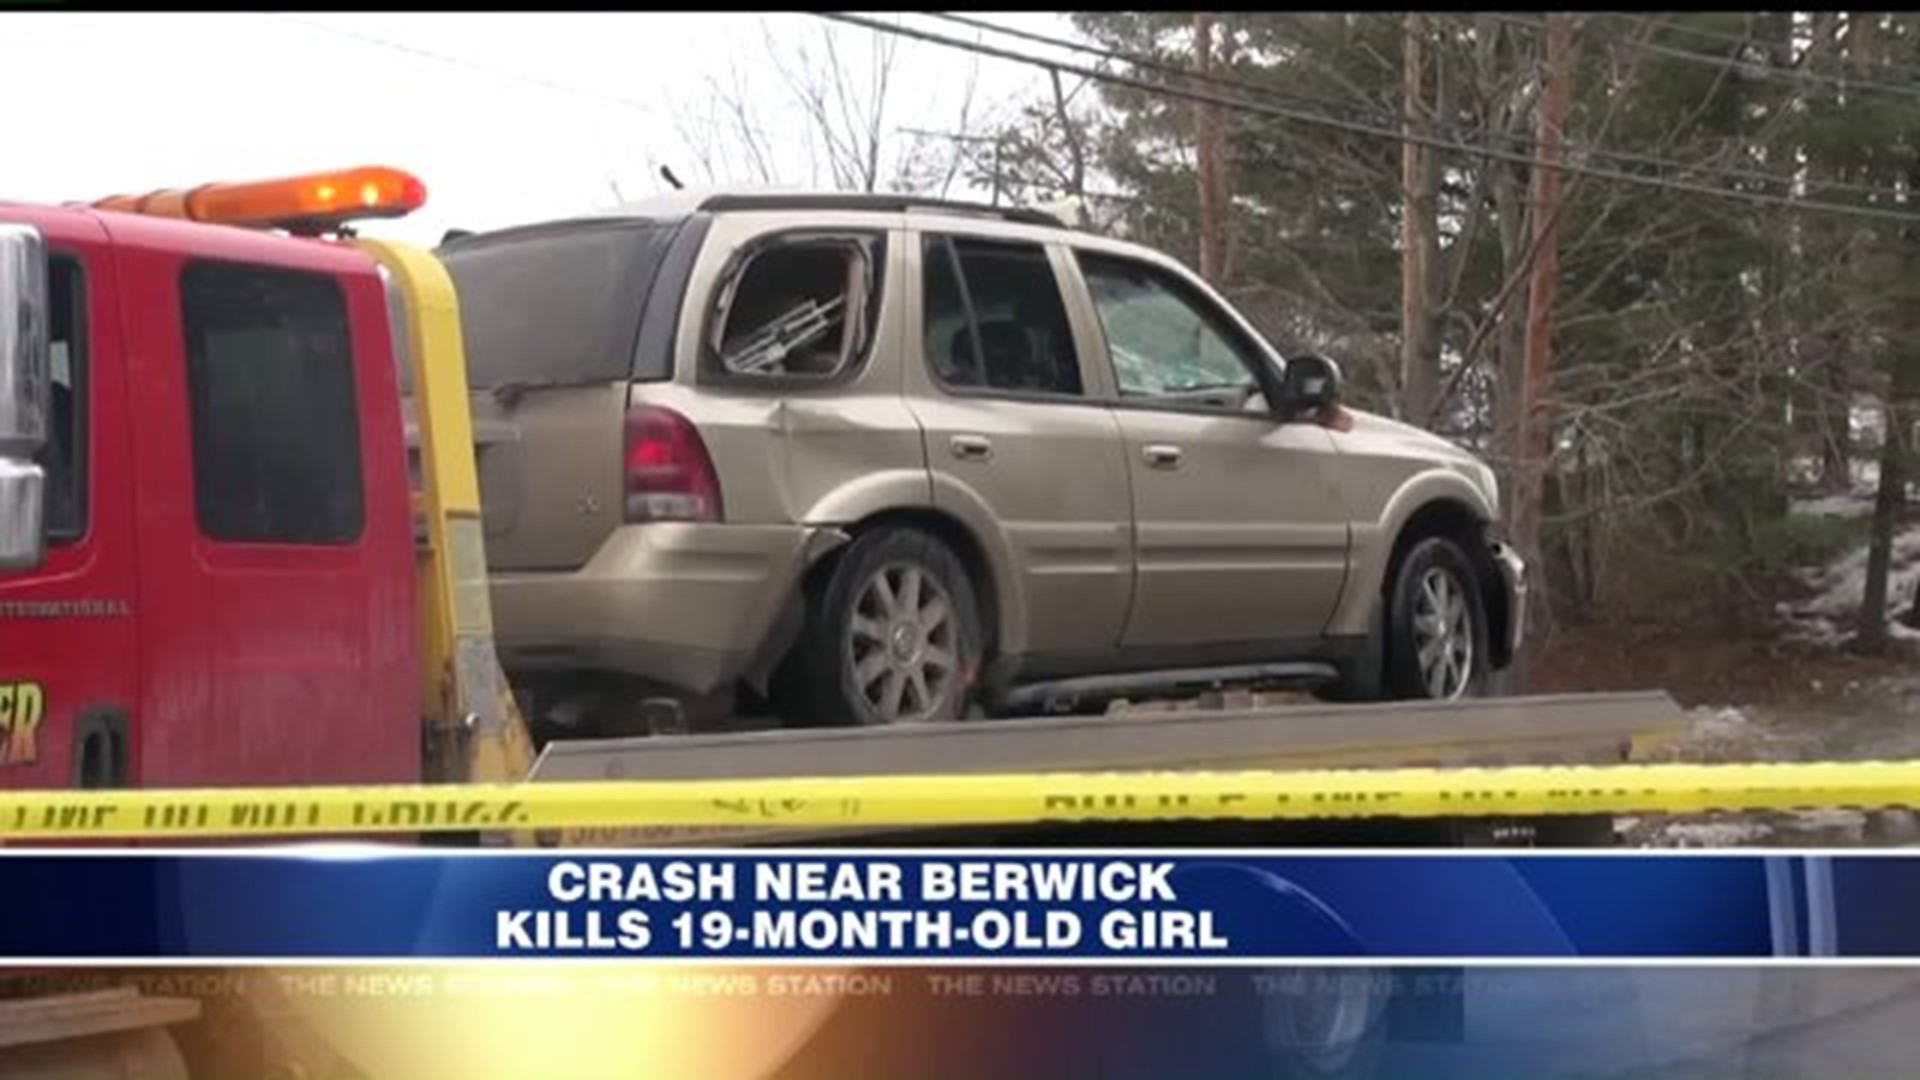 Child Killed in Crash Near Berwick